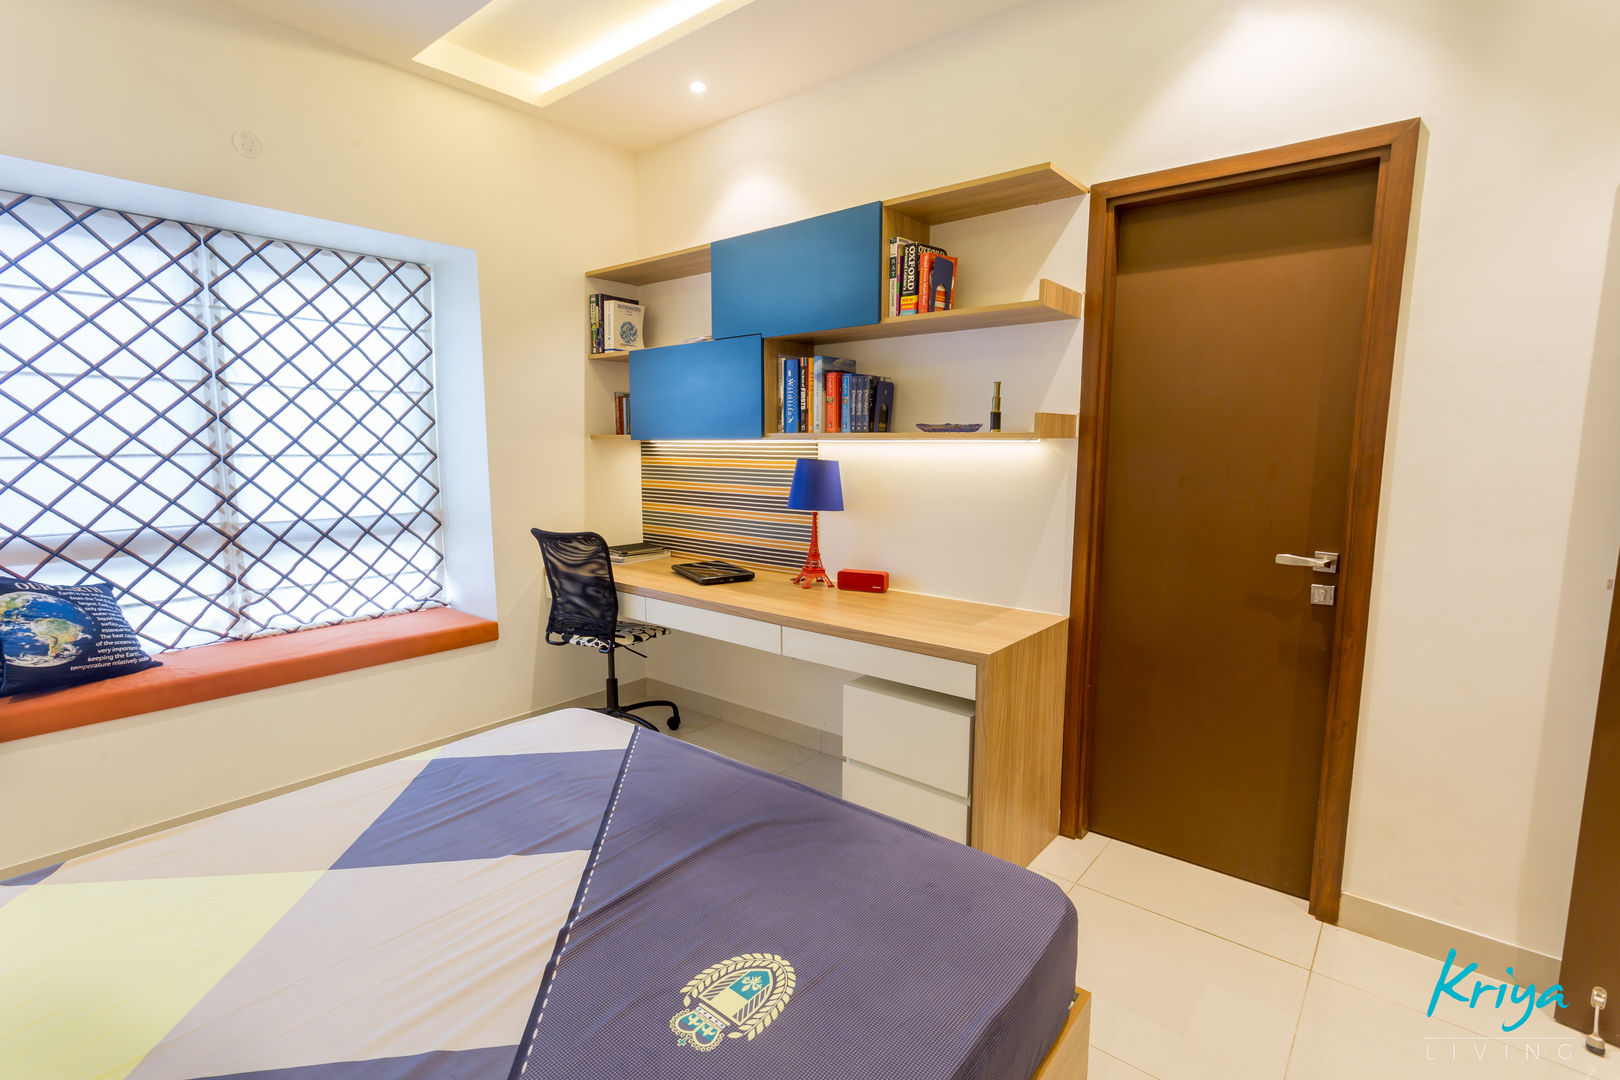 3 BHK apartment - RMZ Galleria, Bengaluru, KRIYA LIVING KRIYA LIVING Modern style bedroom